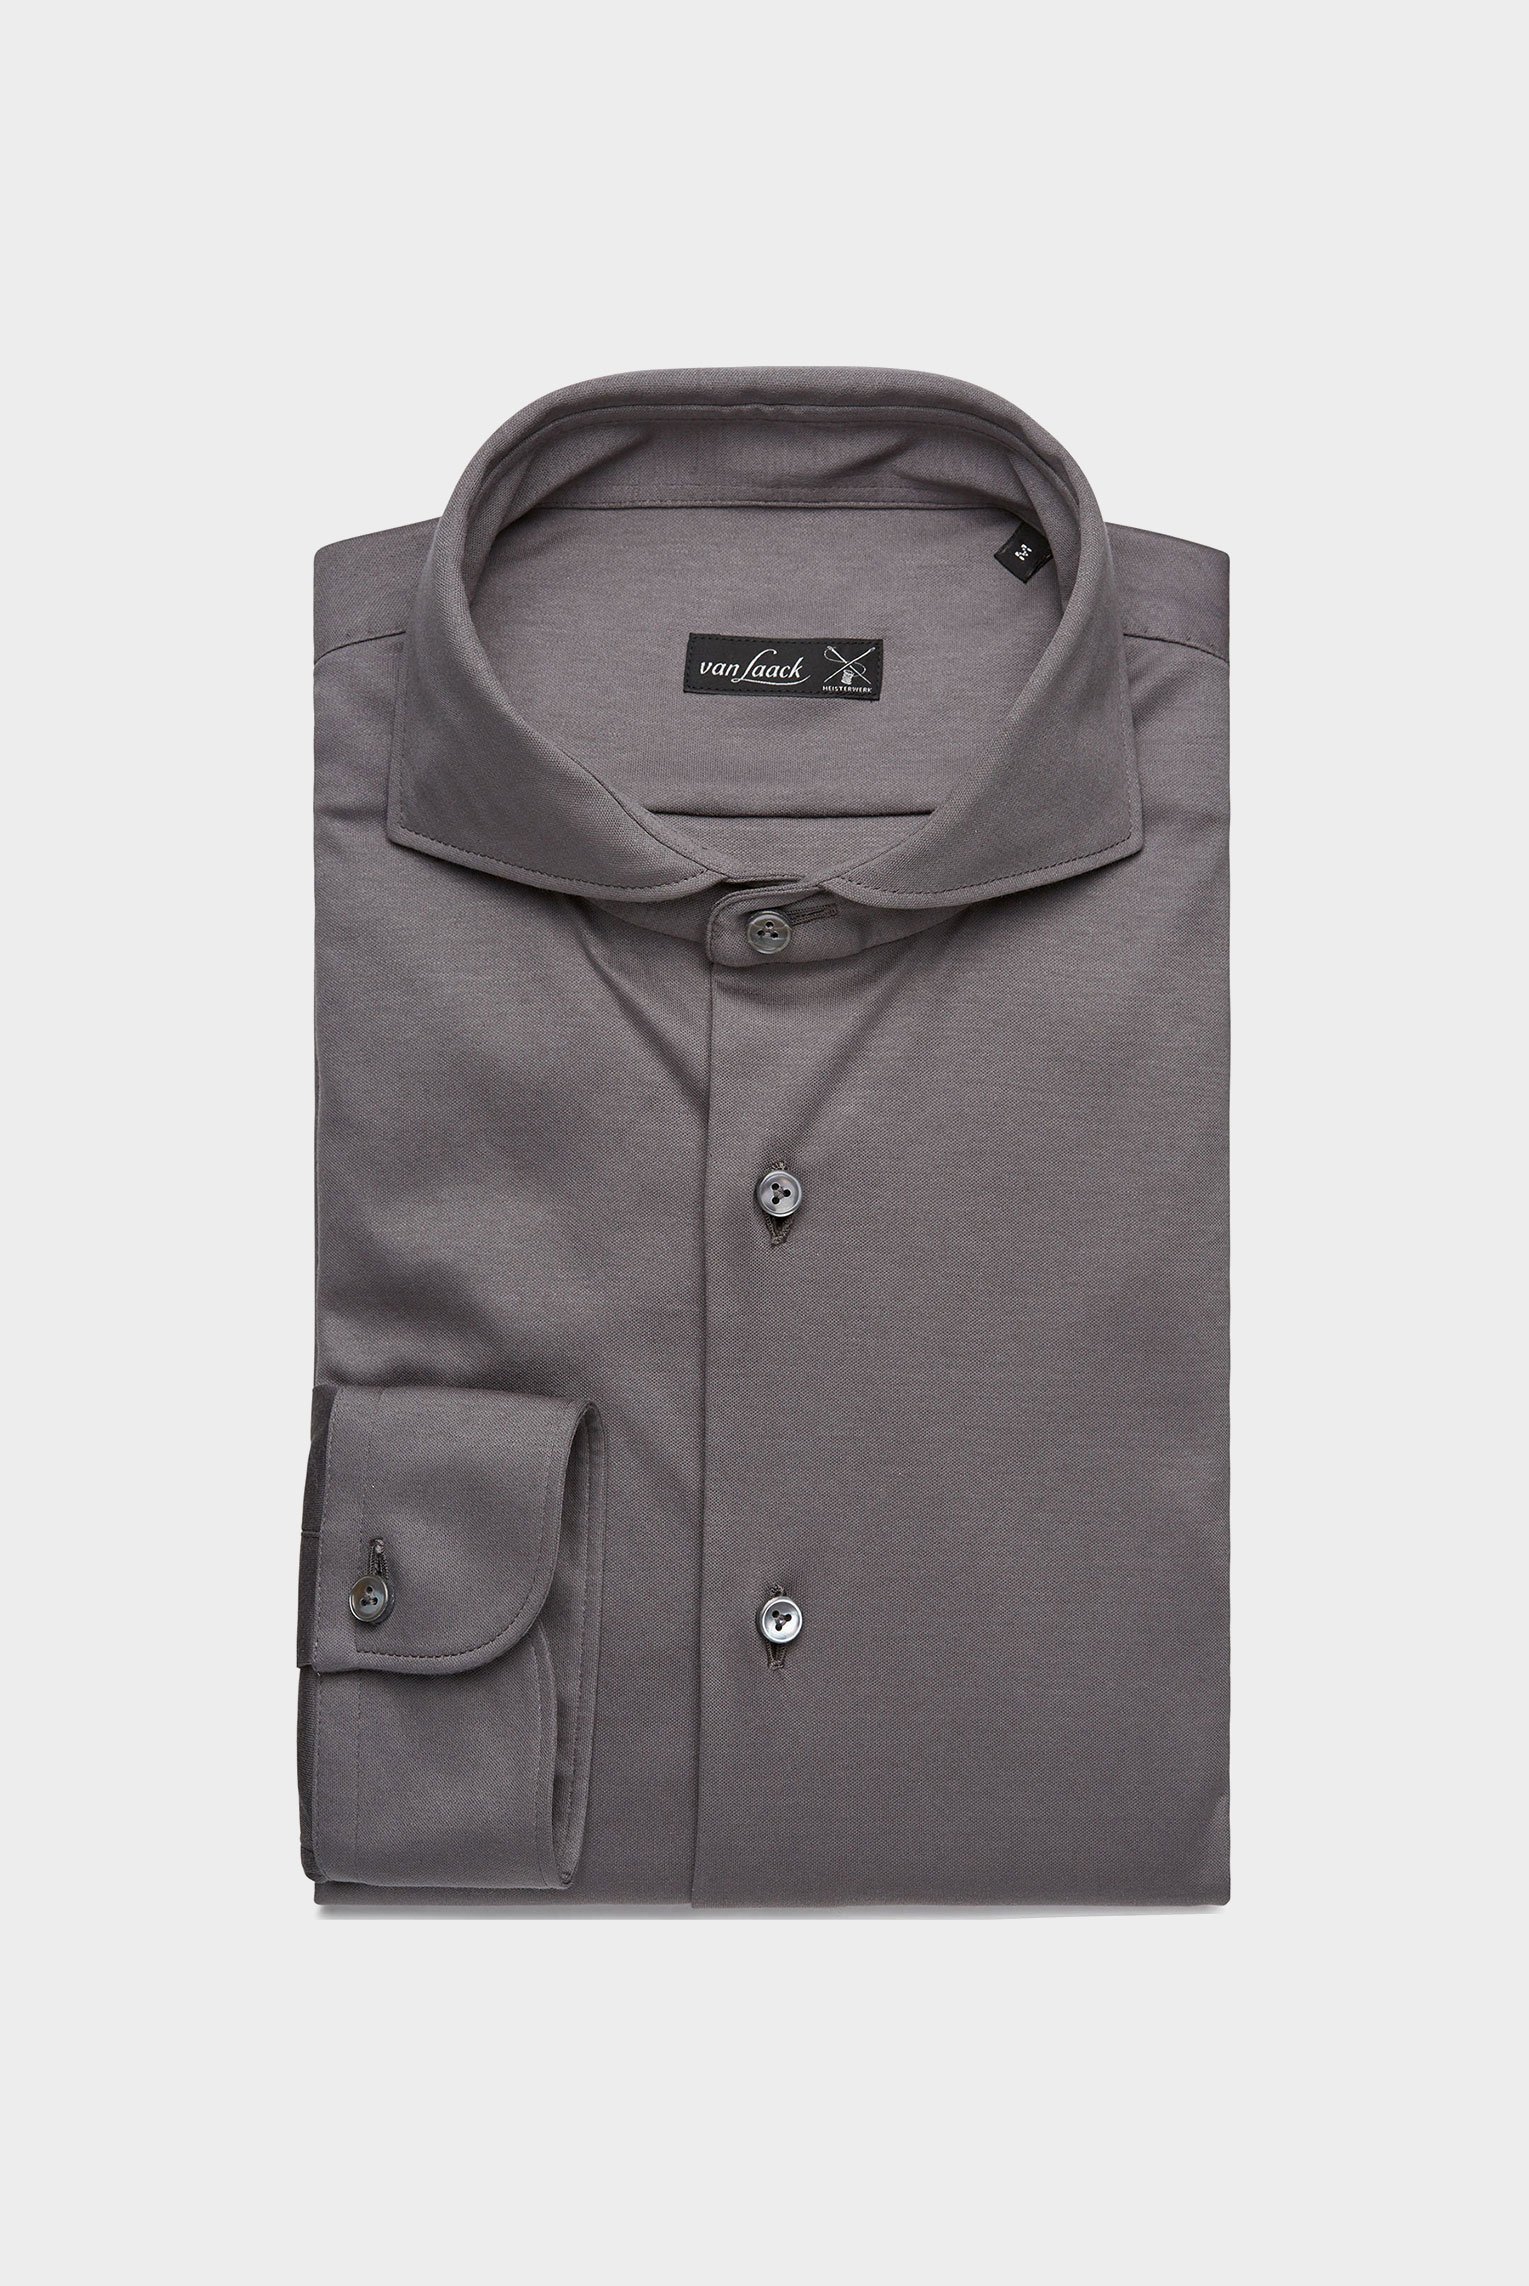 Casual Hemden+Jersey Hemd aus Schweizer Baumwolle Tailor Fit+20.1683.UC.180031.070.X4L